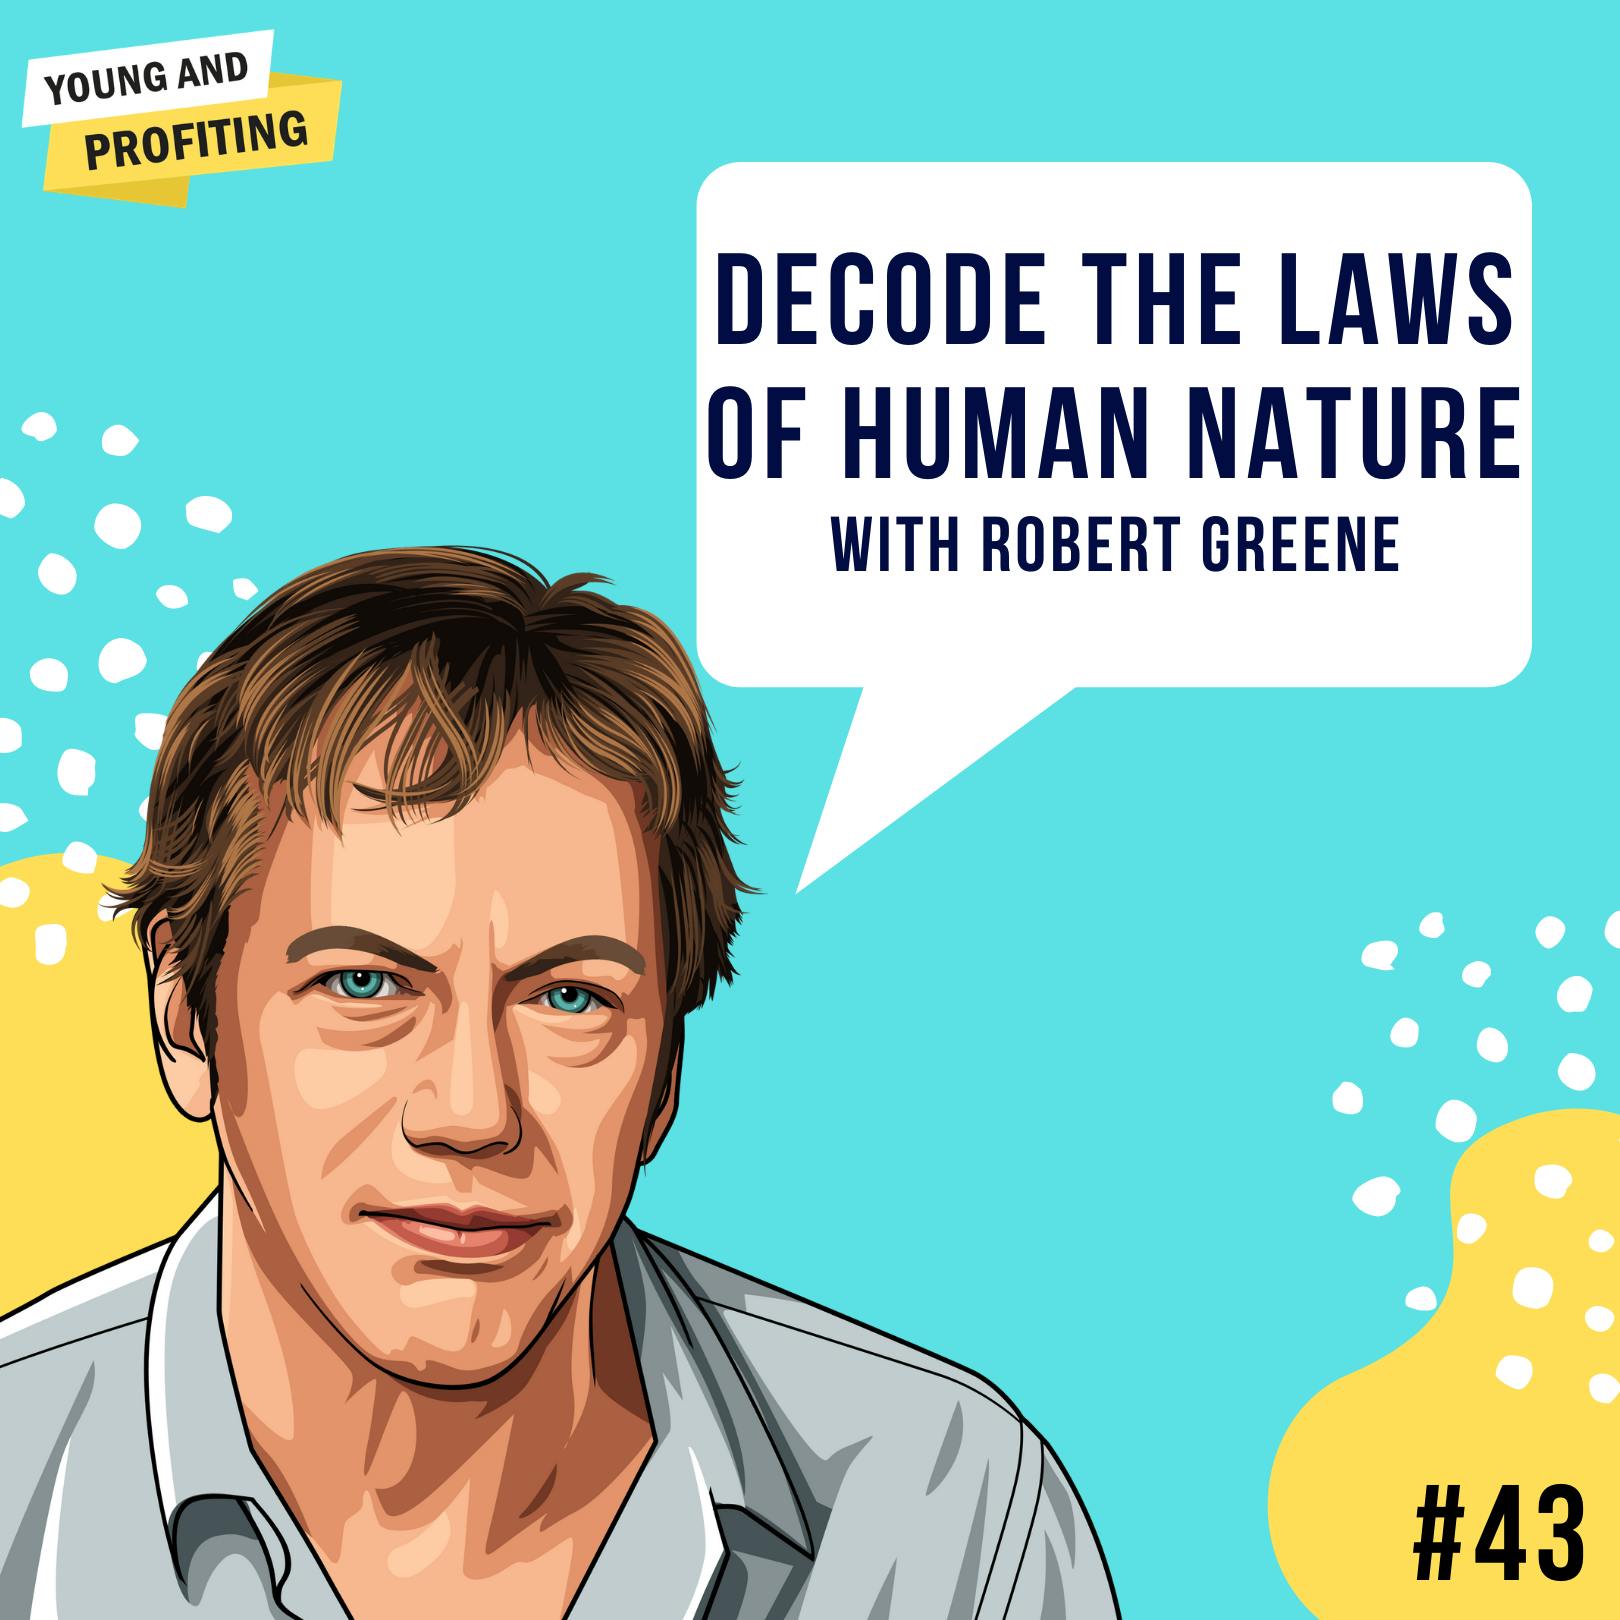 Robert Greene [Part 1] : Decoding the Laws of Human Nature | E43 by Hala Taha | YAP Media Network